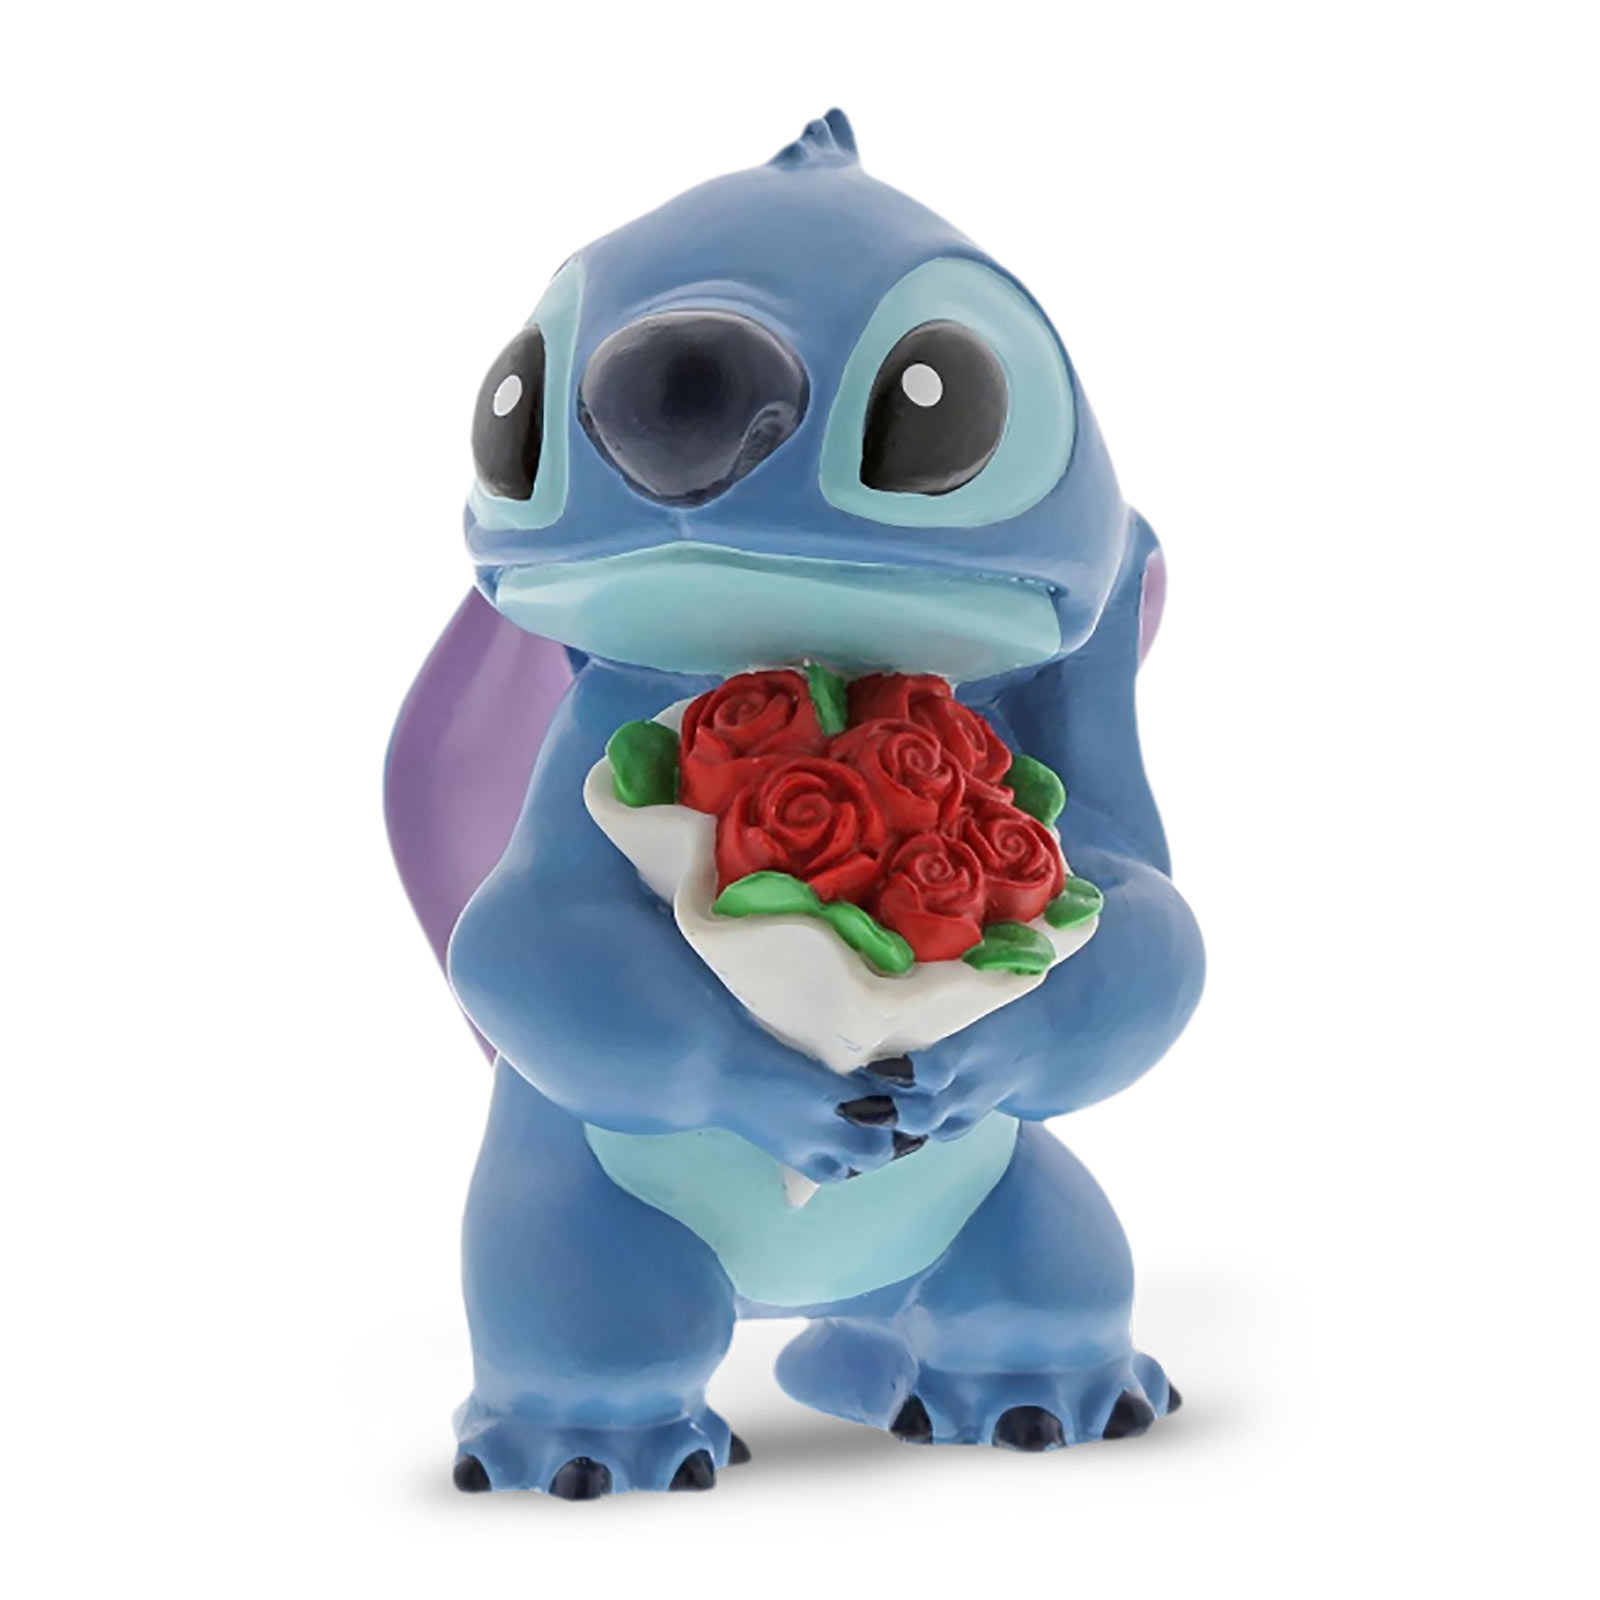 Lilo & Stitch - Stitch Figure with Roses